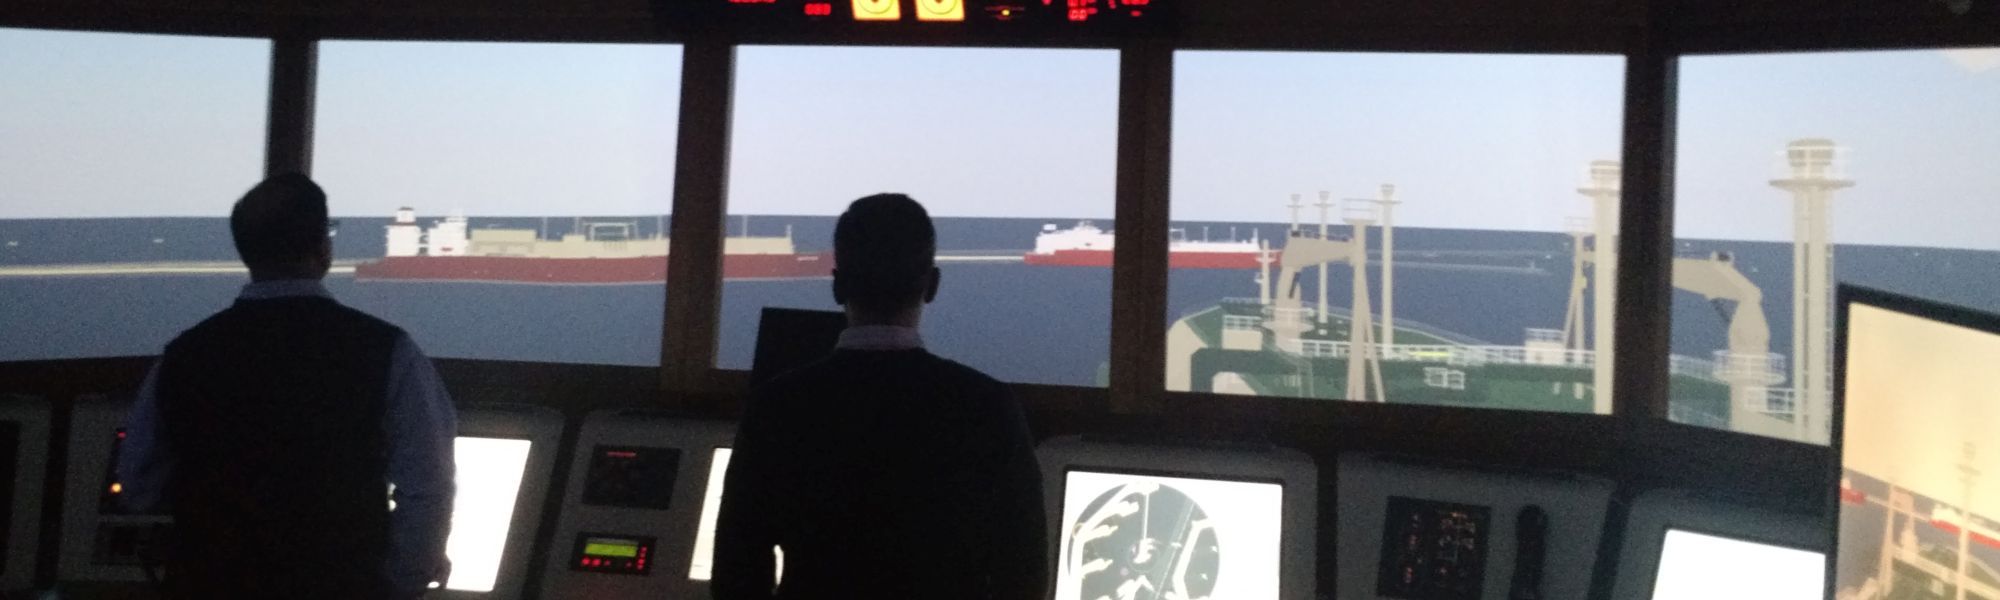 Update of Vessel Maneuvering and Vessel Traffic Simulation Studies